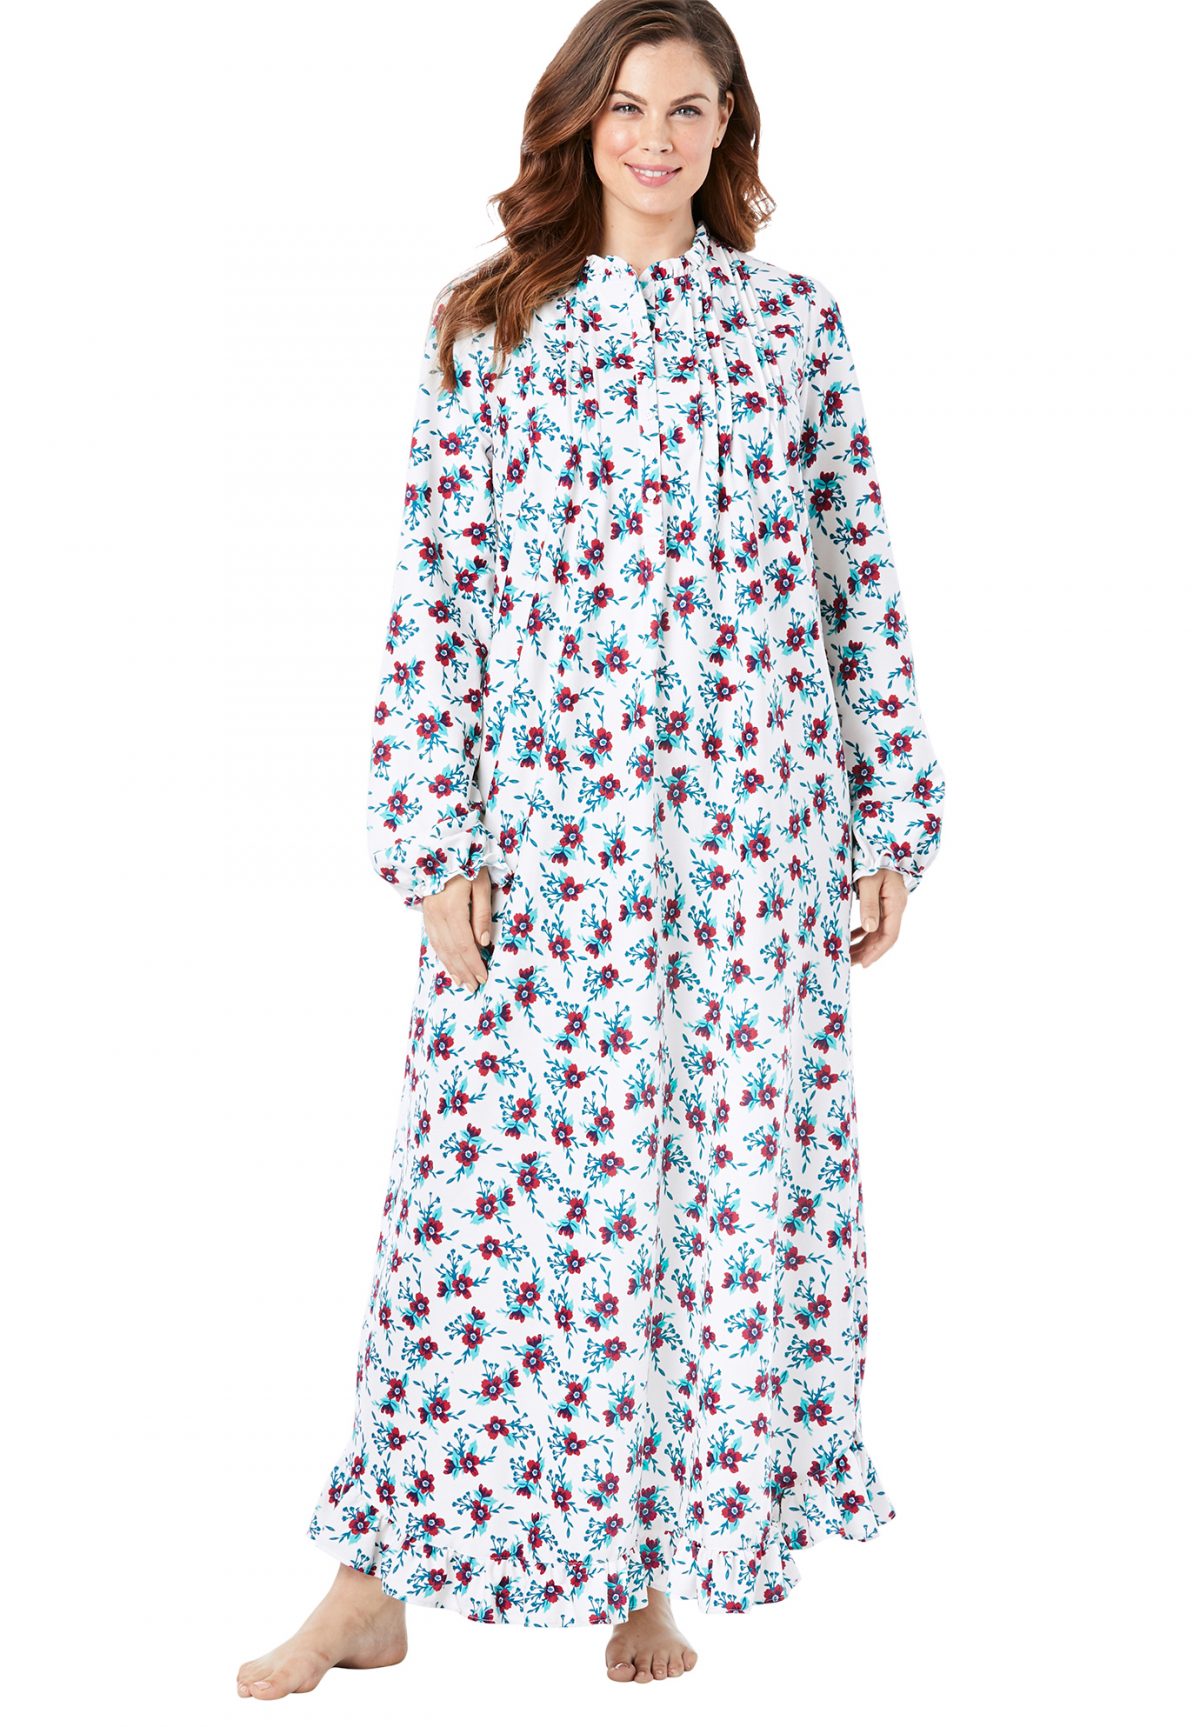 egyptian cotton nightgowns Archives - Silk Pajamas, Cotton Sleepwear ...